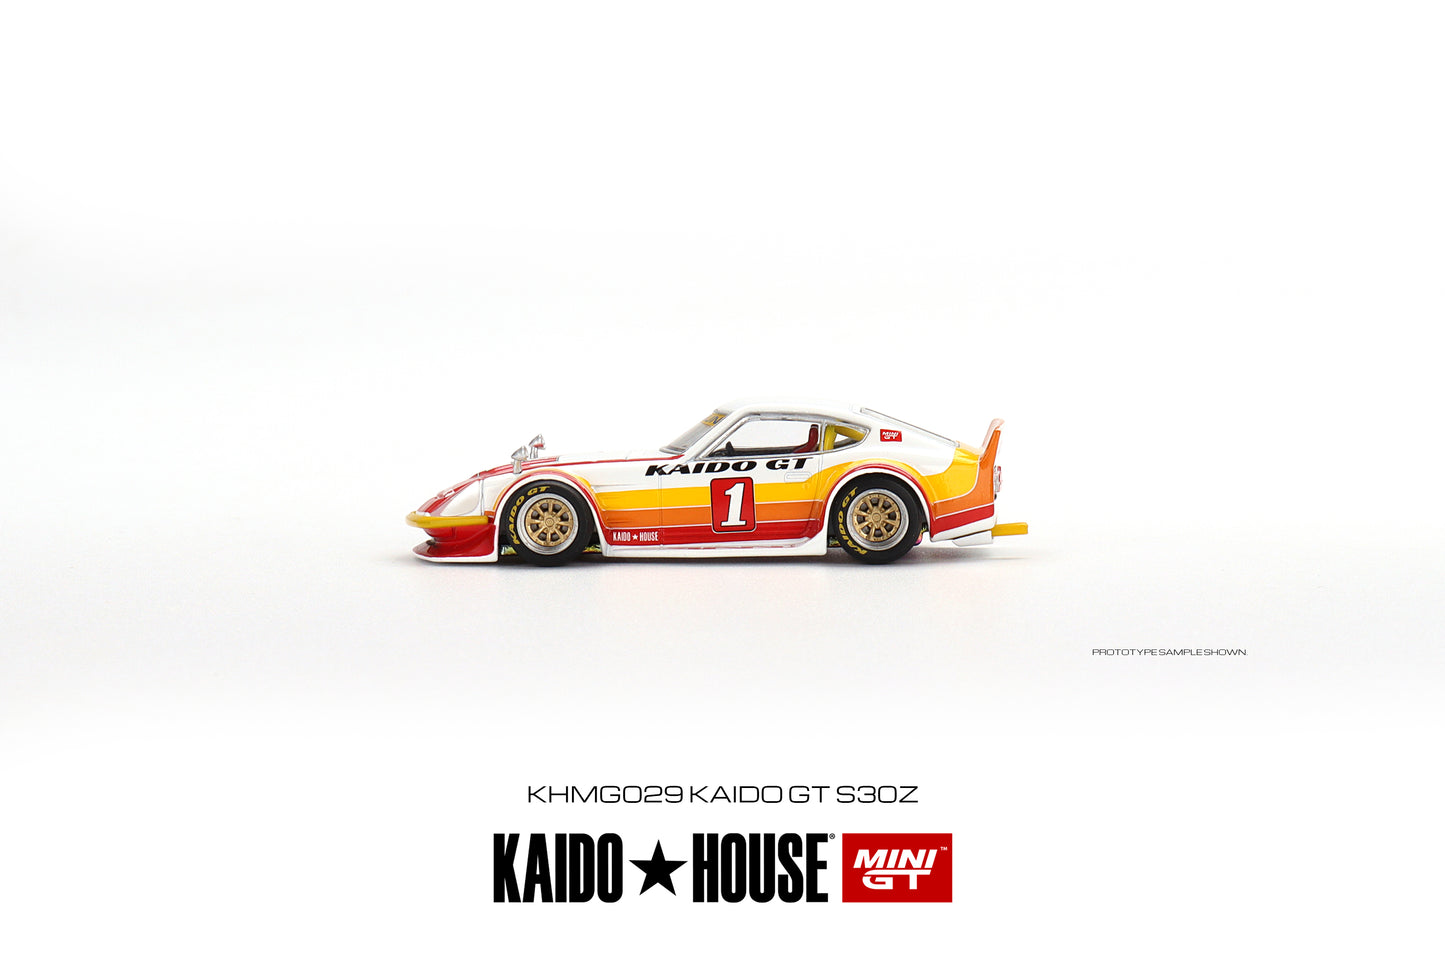 Mini GT Kaido House 029 Datsun Fairlady Z V1 White Yellow Orange Red 1:64